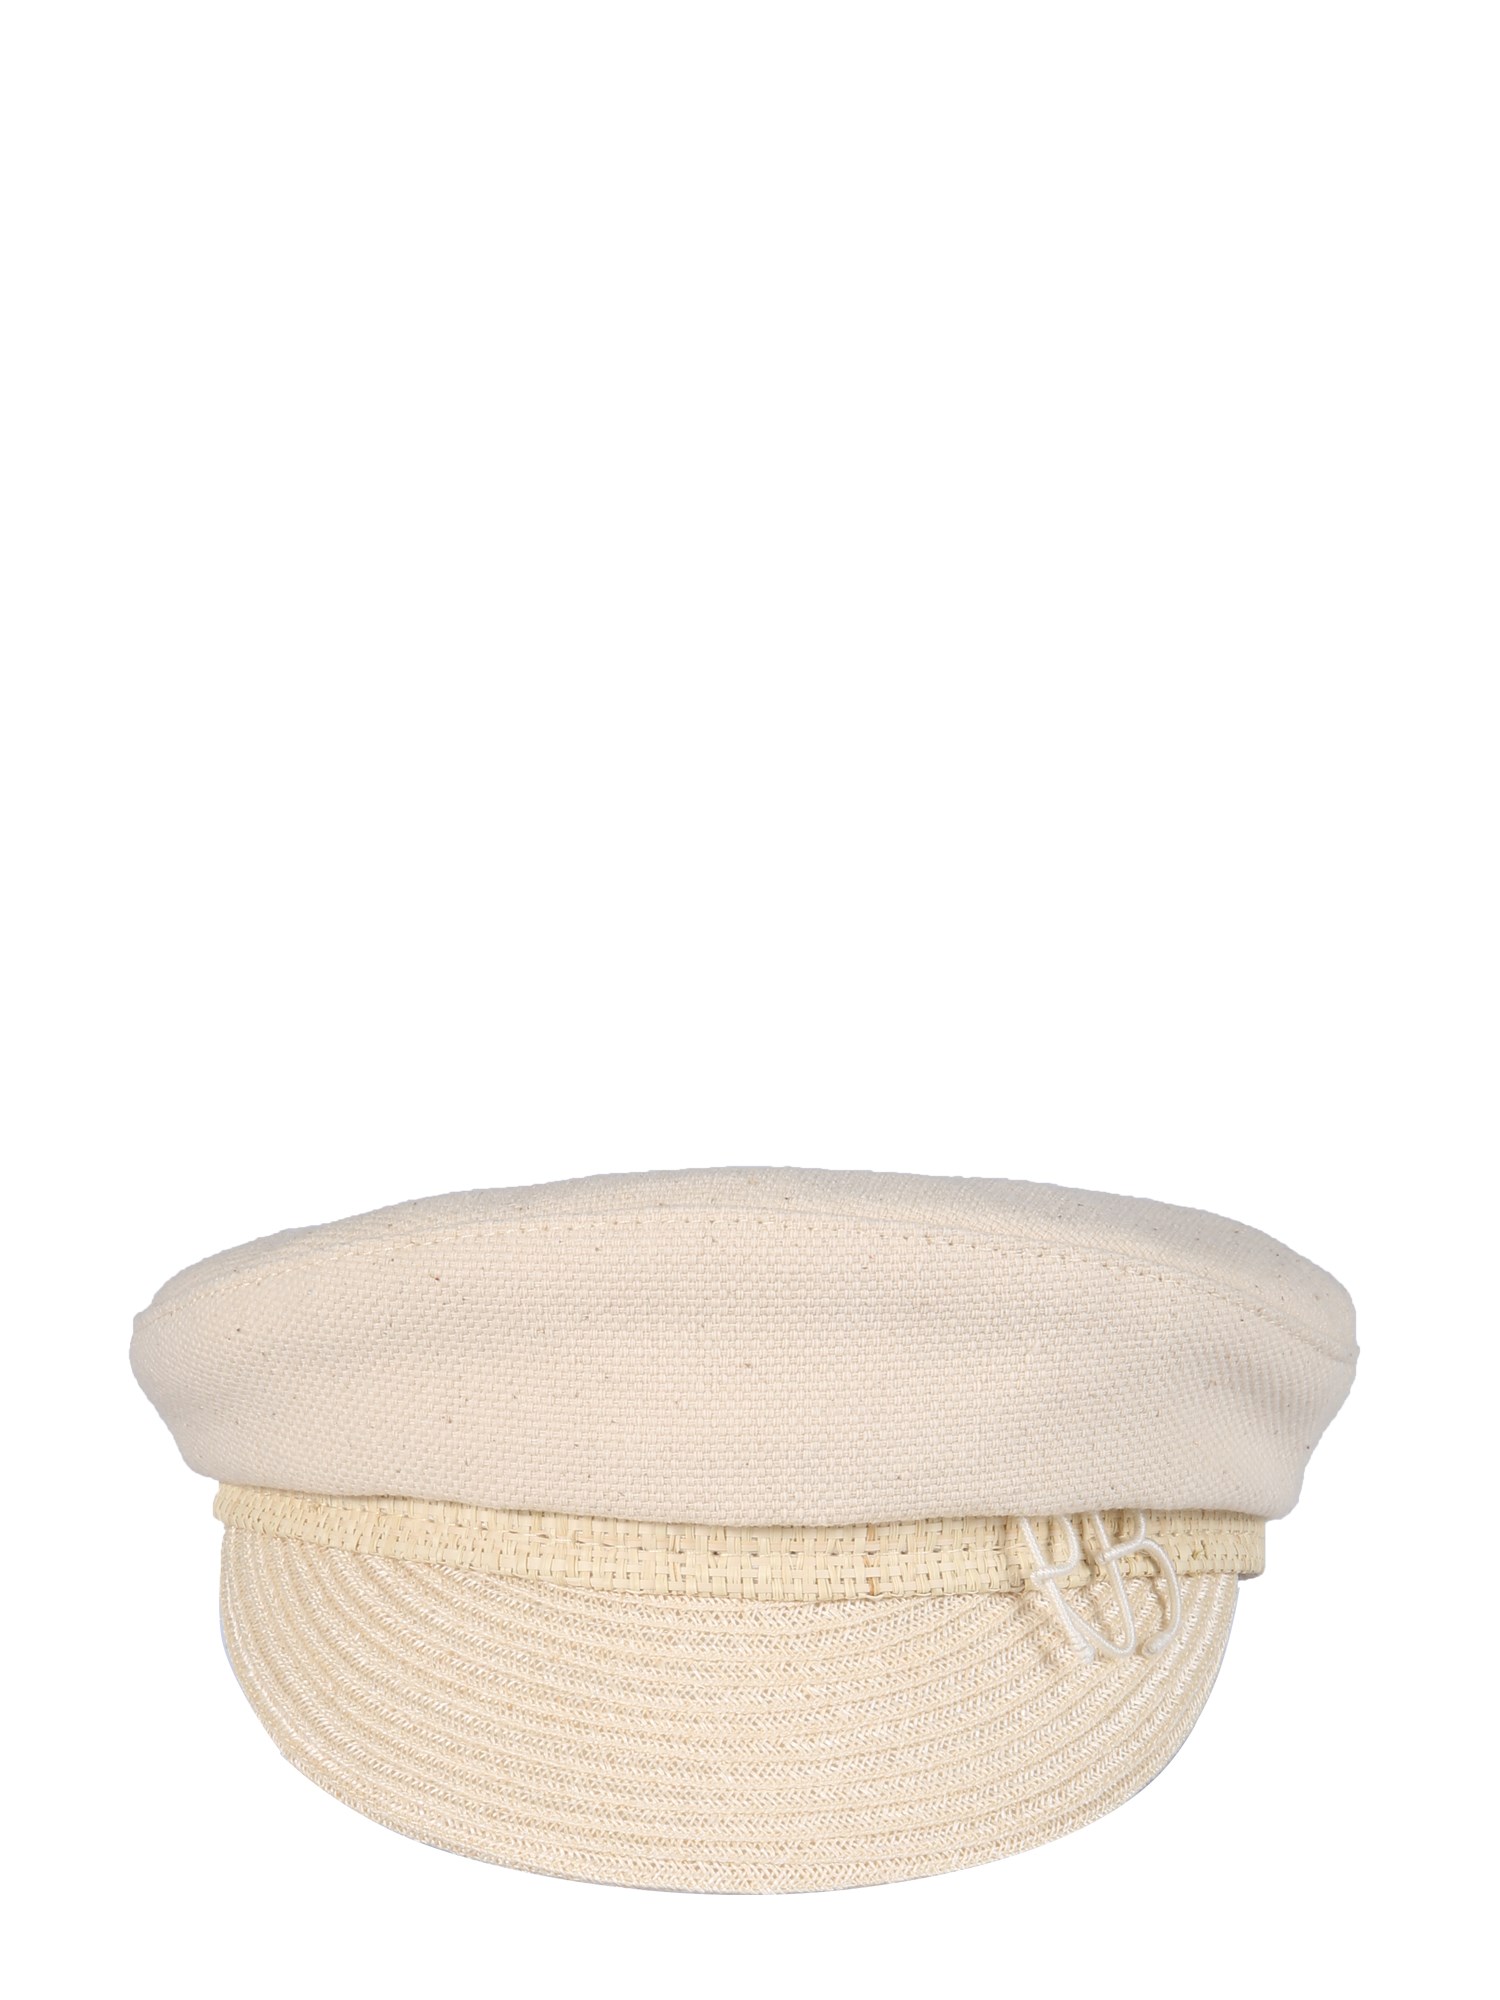 ruslan baginskiy combined baker boy hat